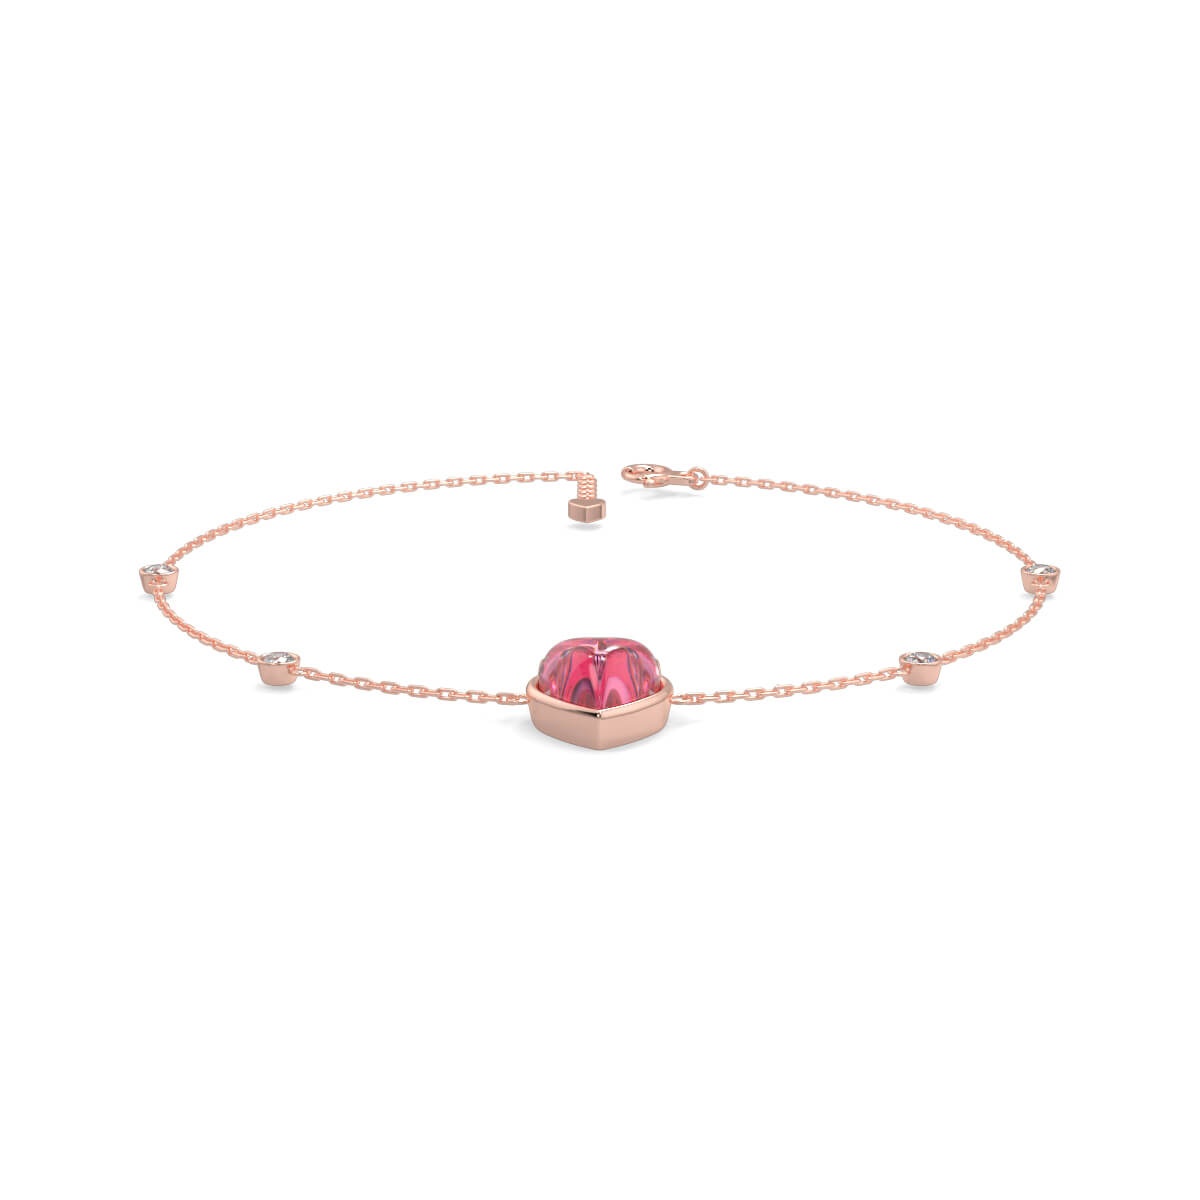 Queen Heart Rose Quartz and Diamond Bracelet